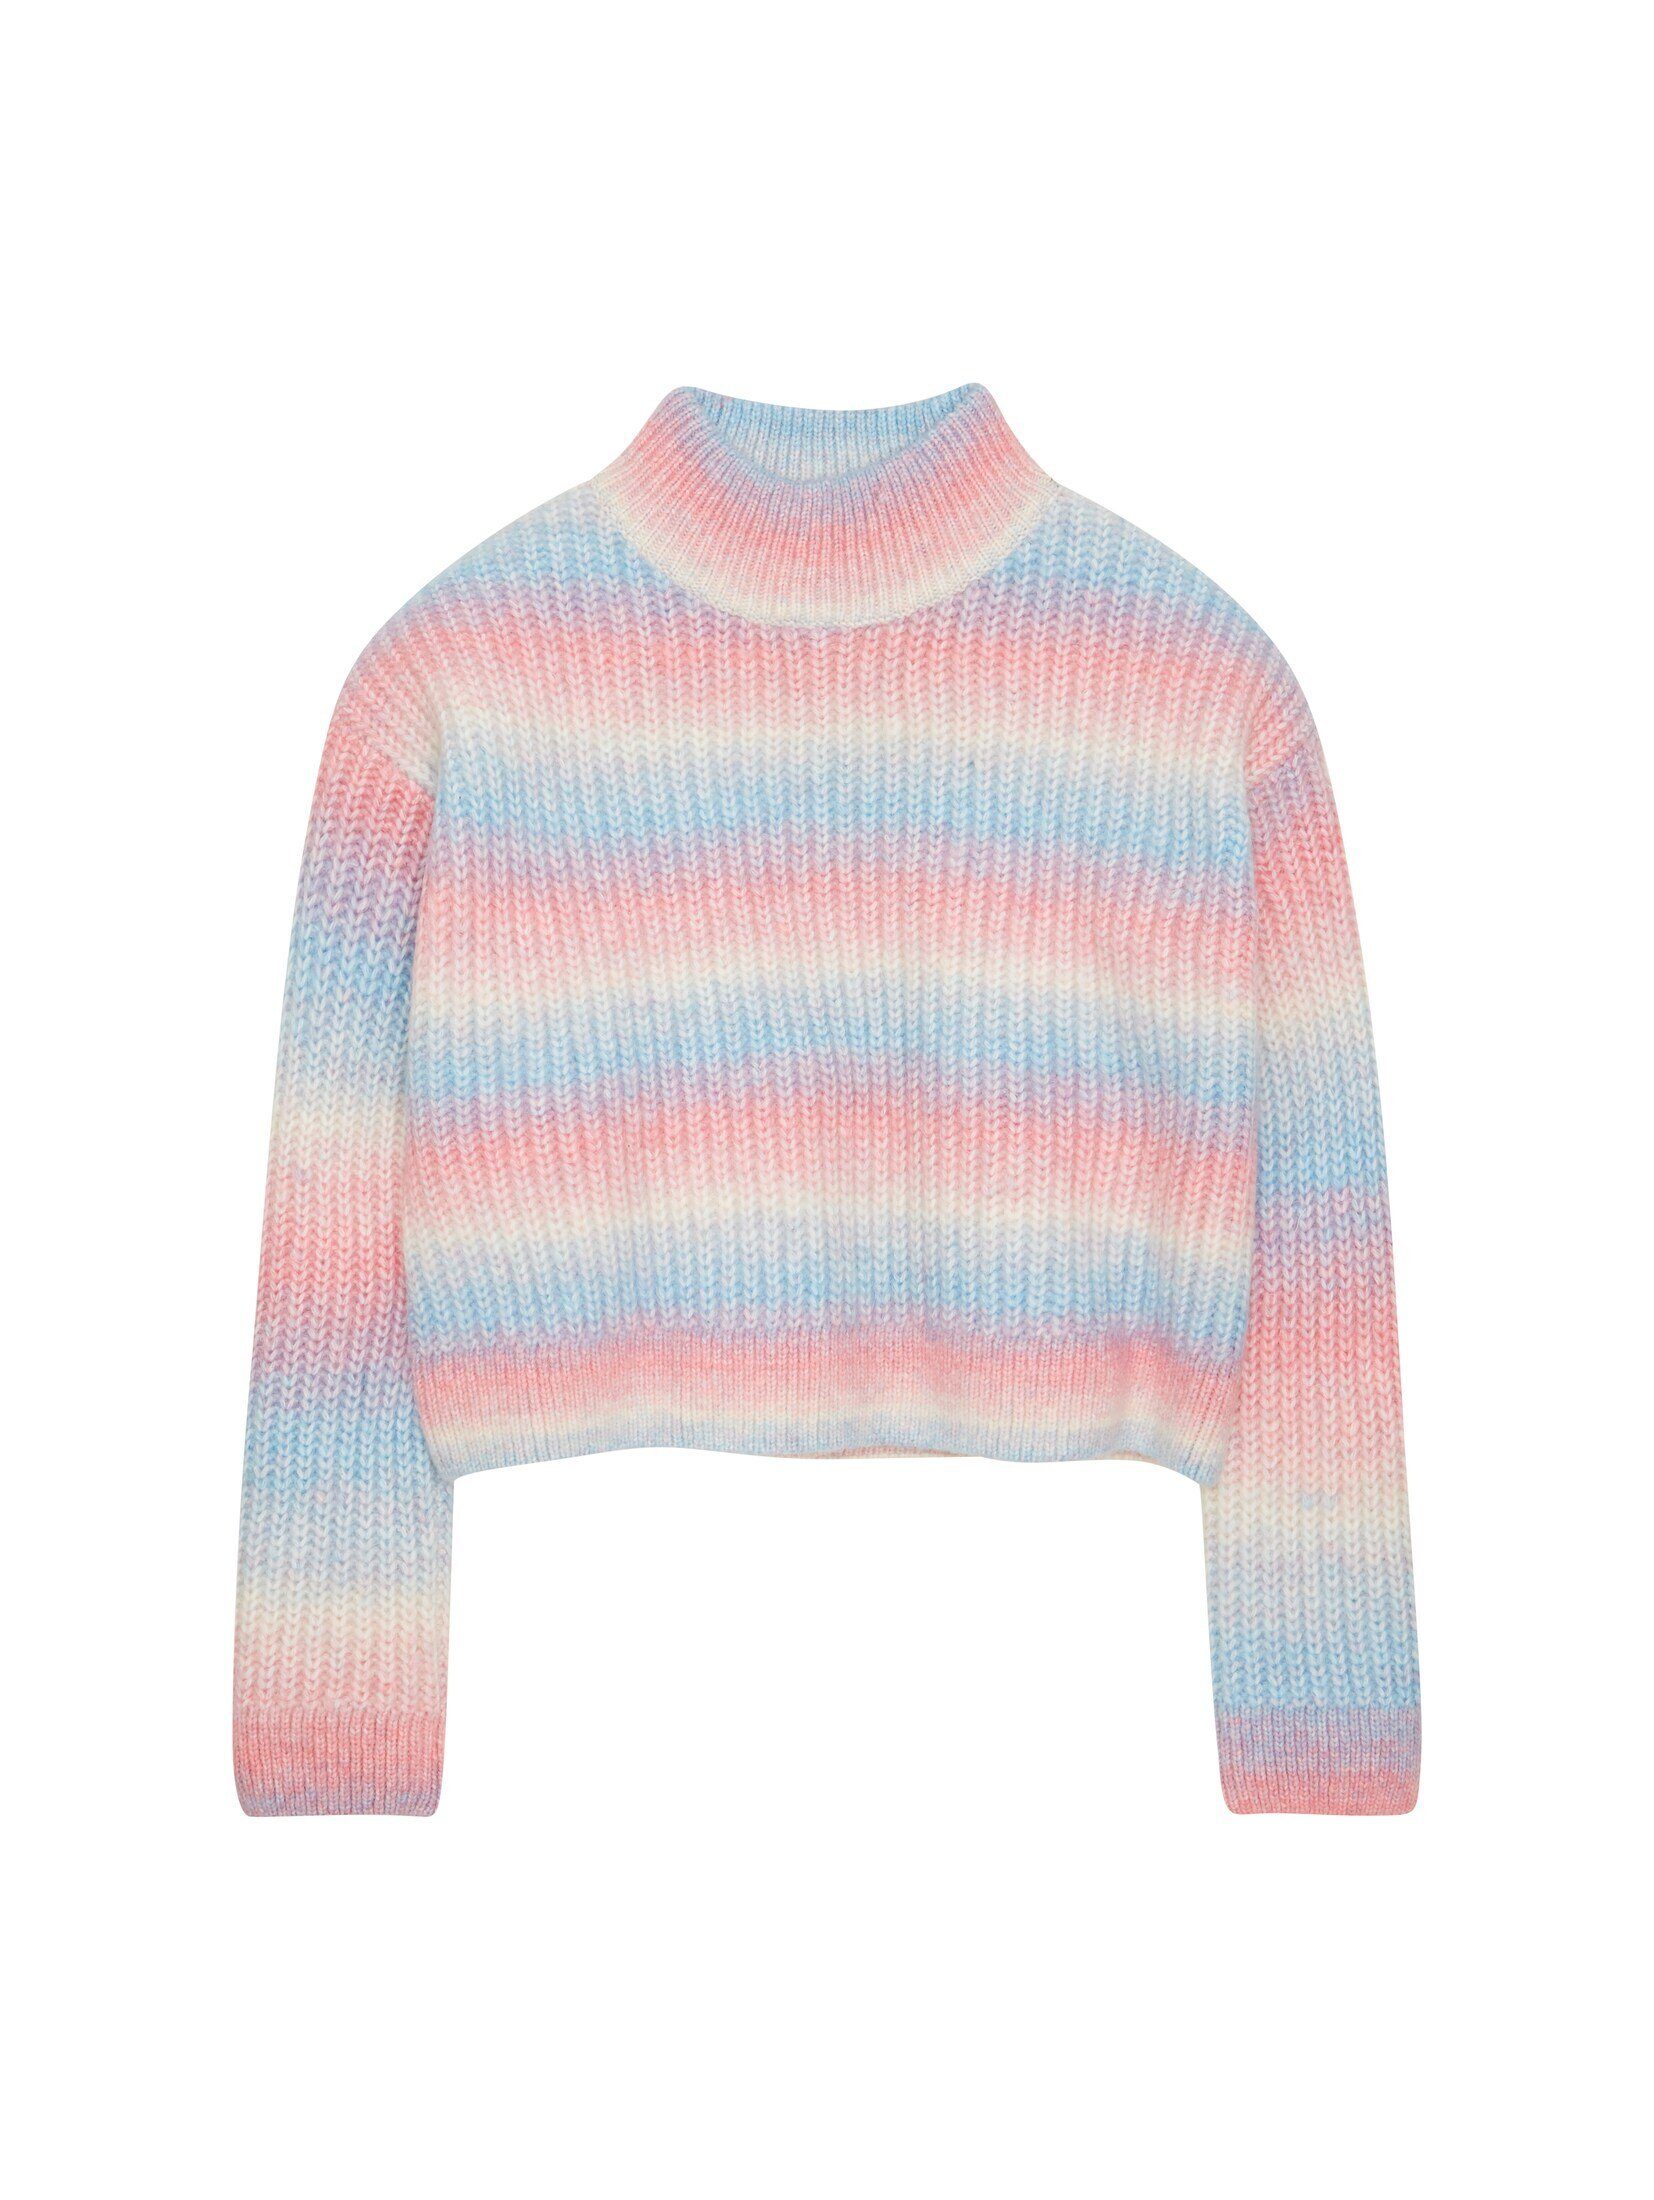 TOM TAILOR Strickpullover Cropped Pullover blue pink gradient design